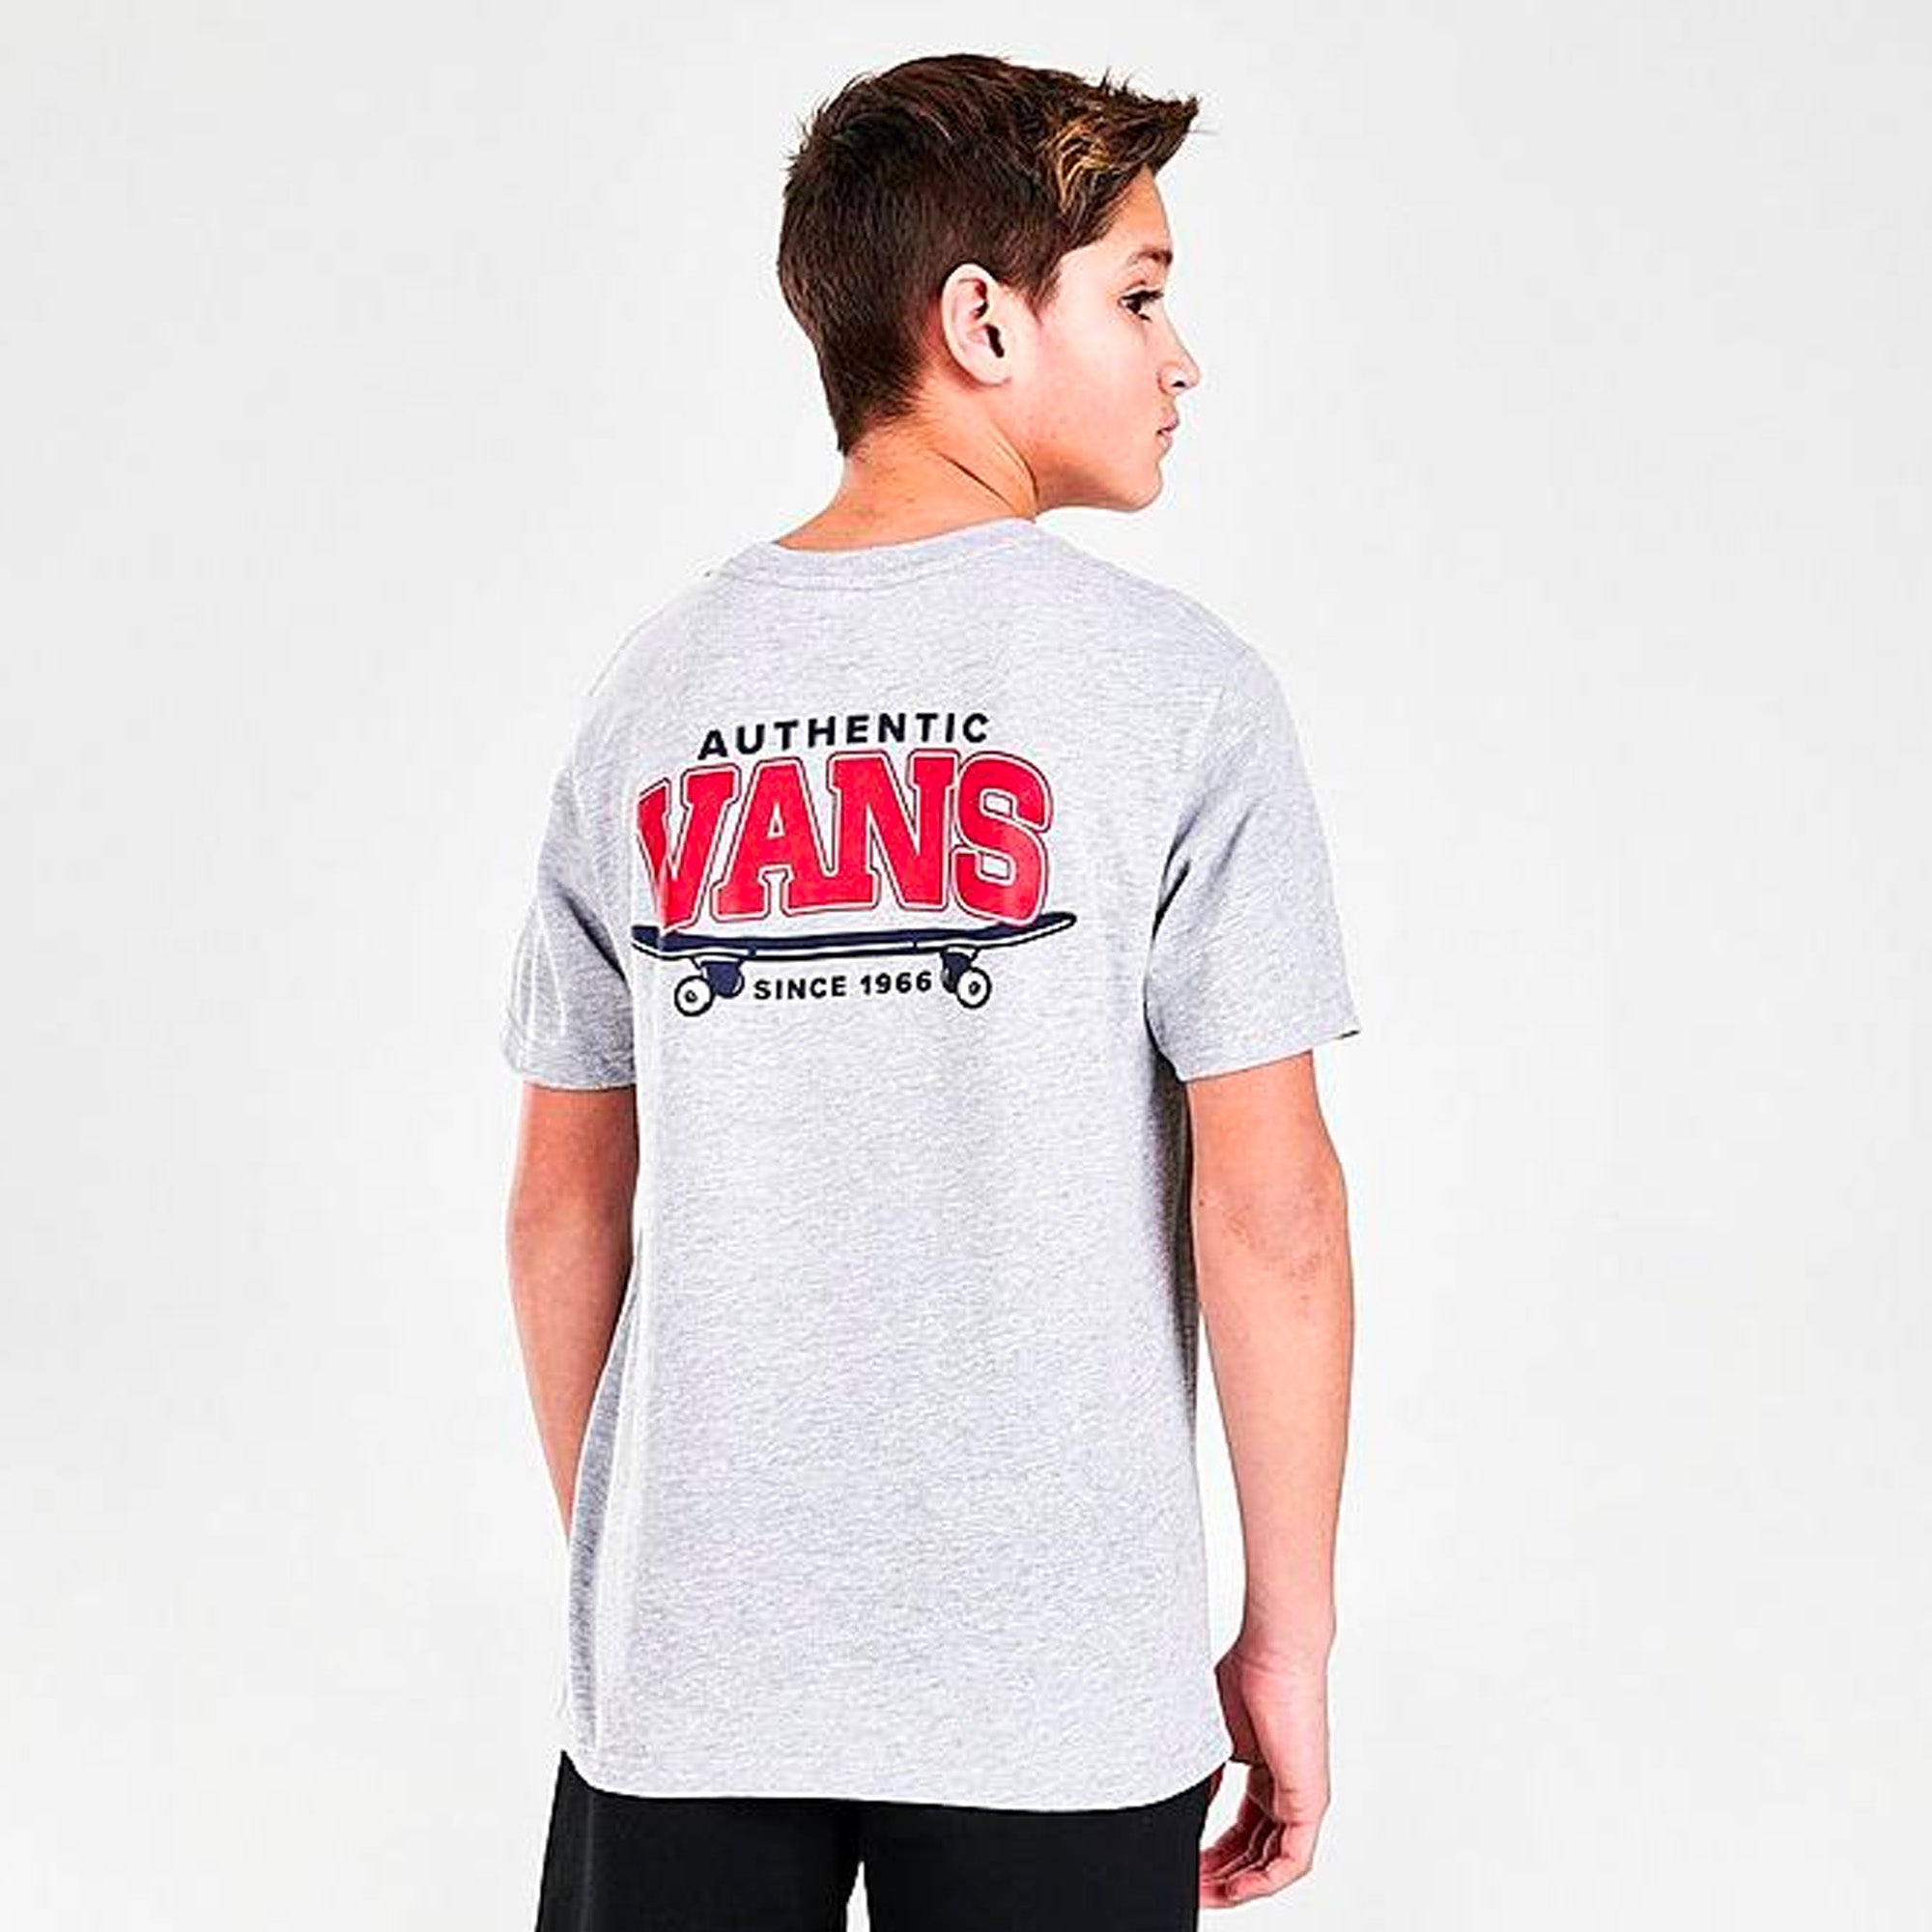 Vans Sk8 Horizon Youth Boy's S/S T-Shirt